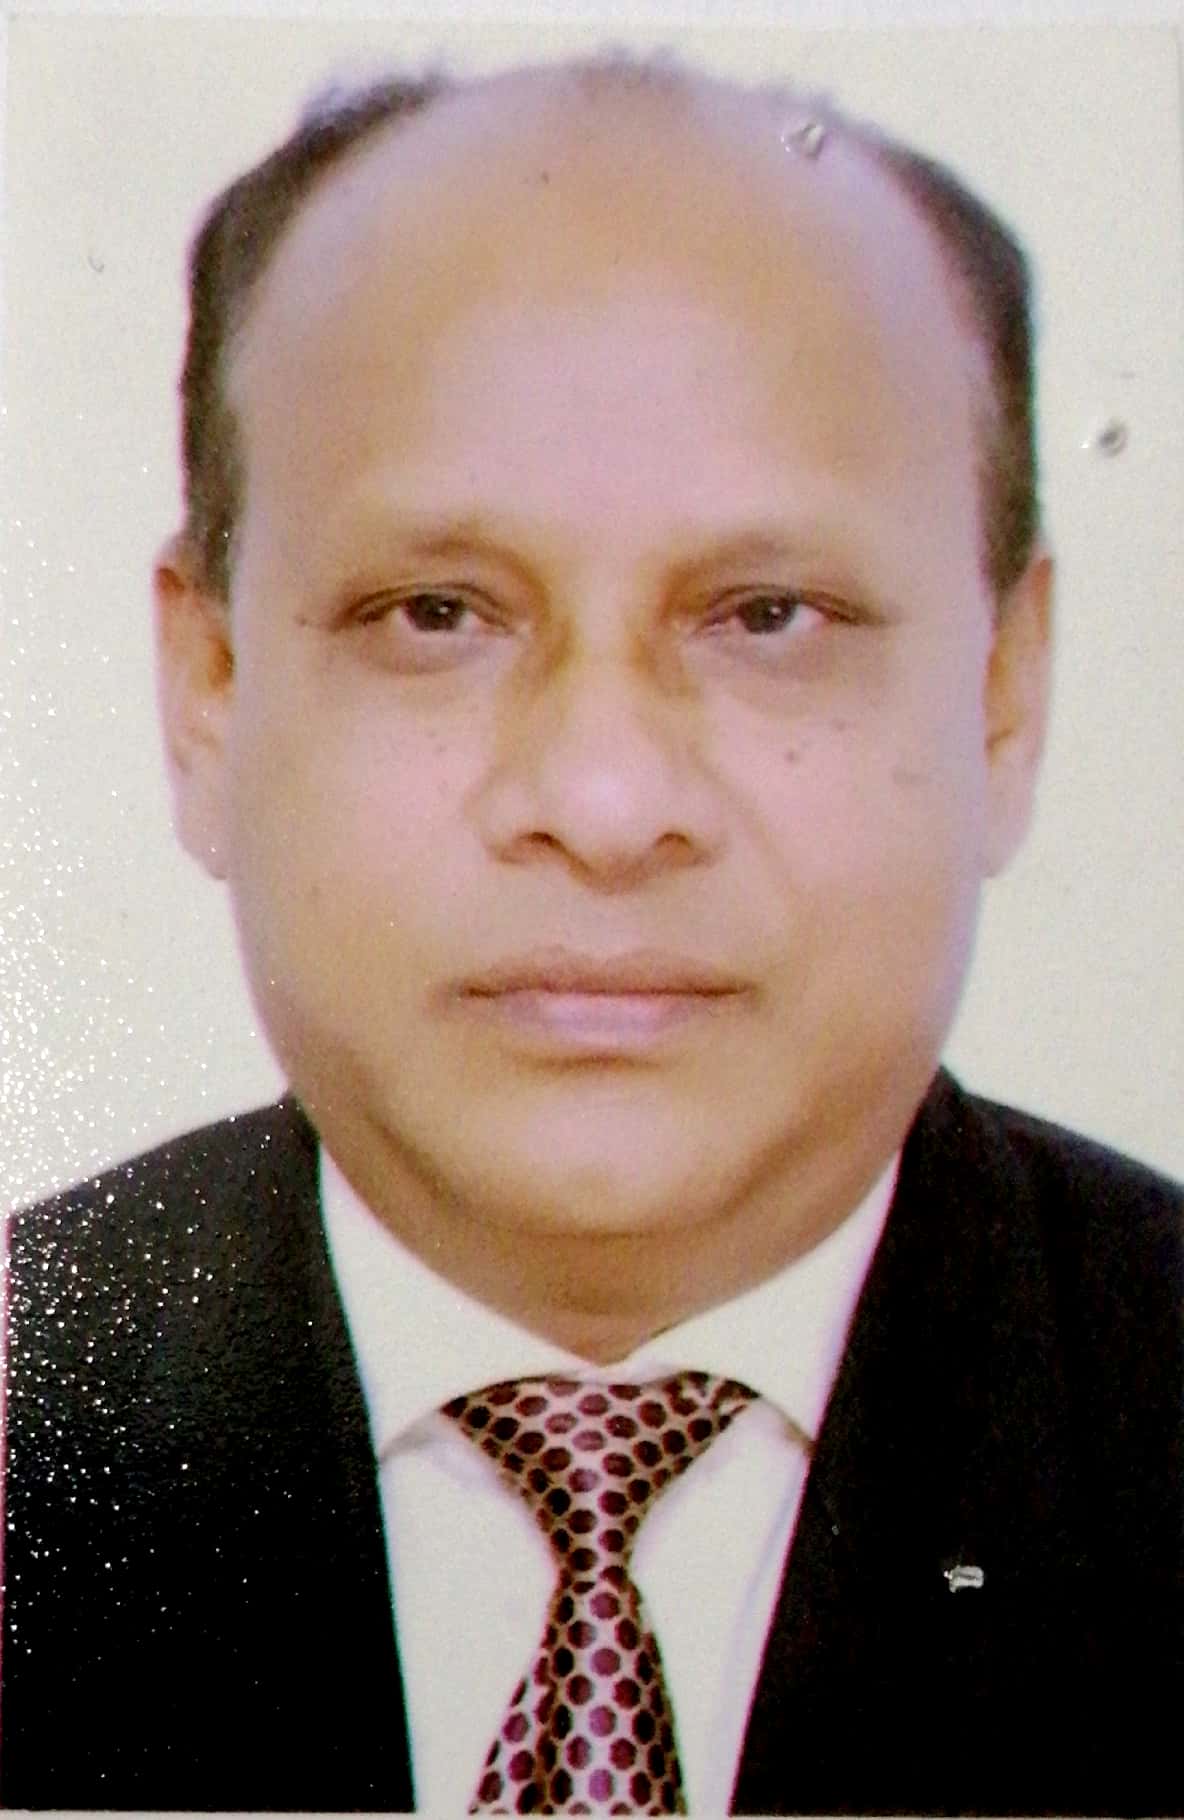 Bishwanath Karmakar